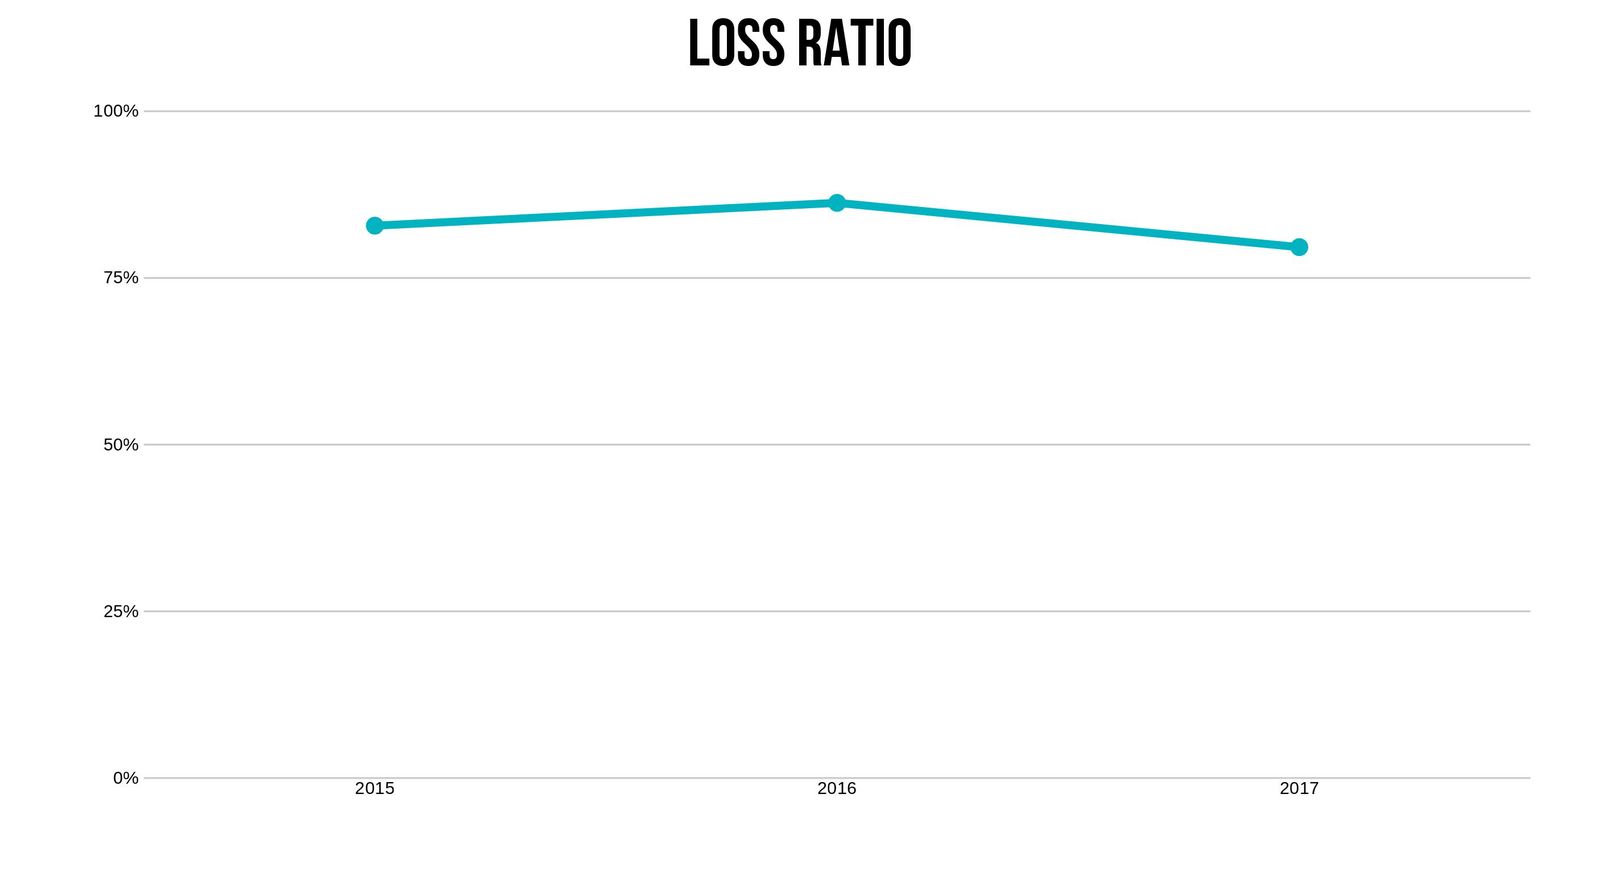 USAA loss ratio trend